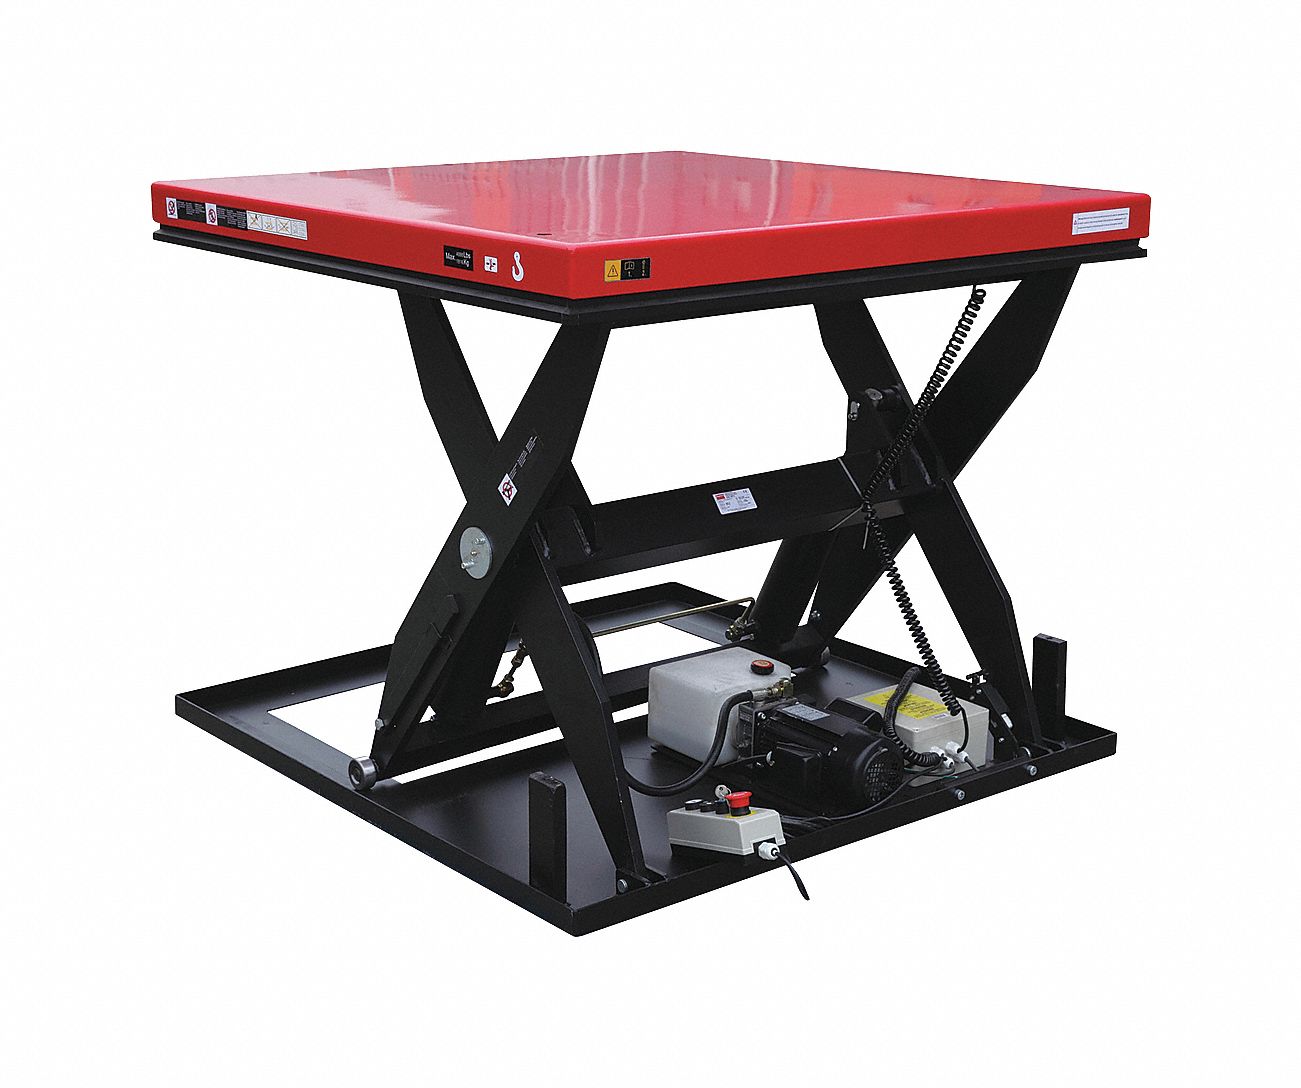 Dayton Stationary Scissor Lift Table 5000 Lb Load Capacity 48